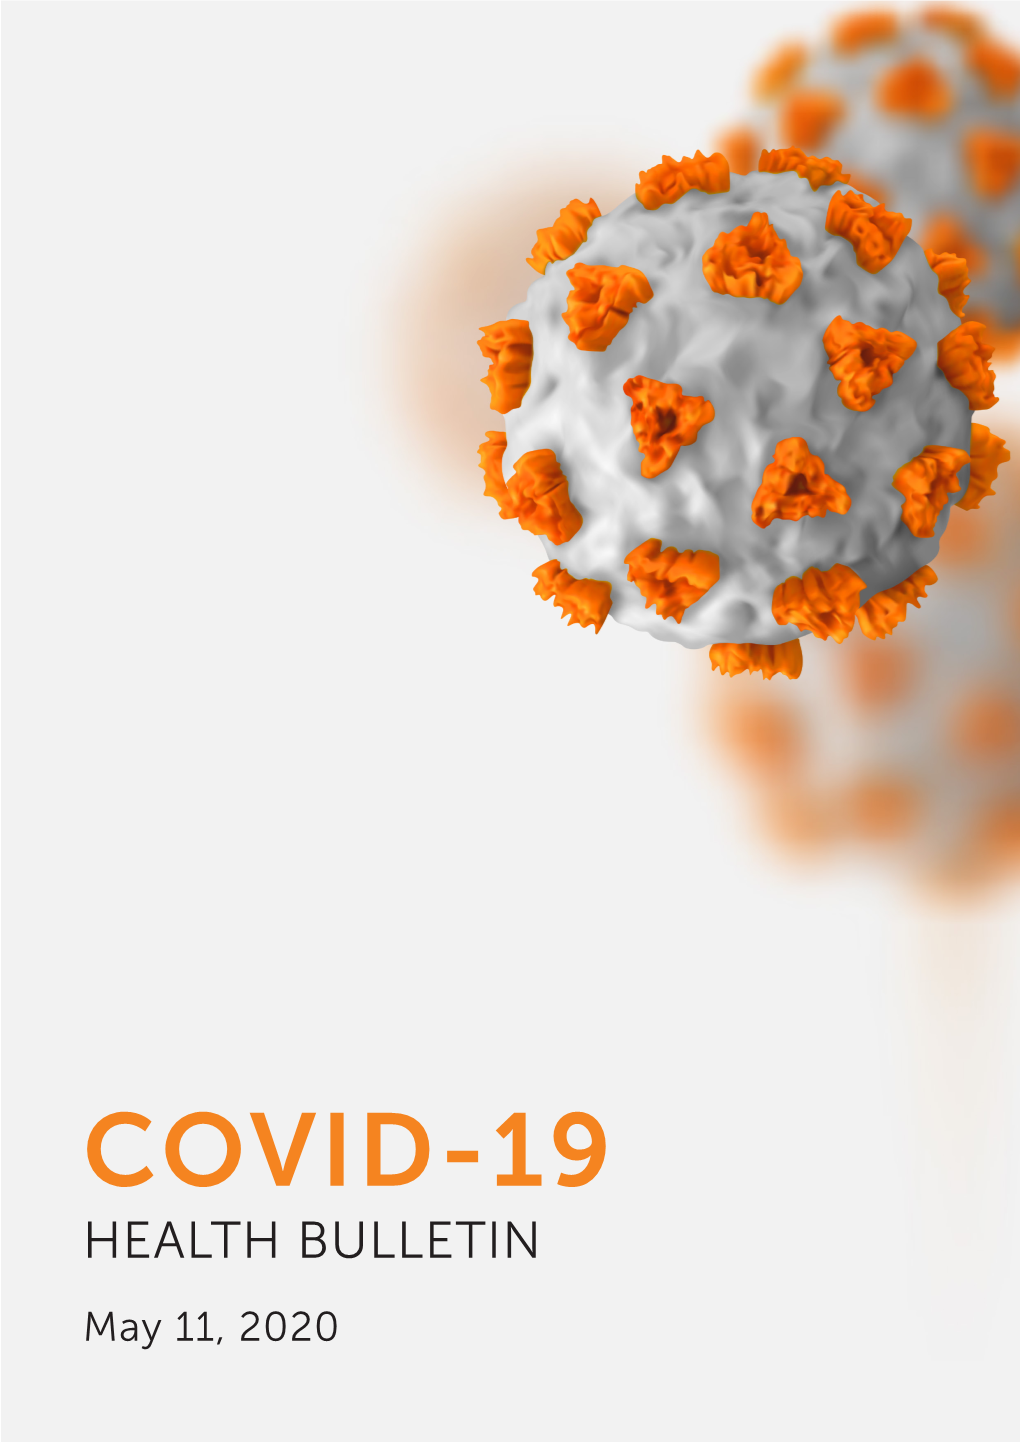 COVID-19 HEALTH BULLETIN May 11, 2020 Introduction